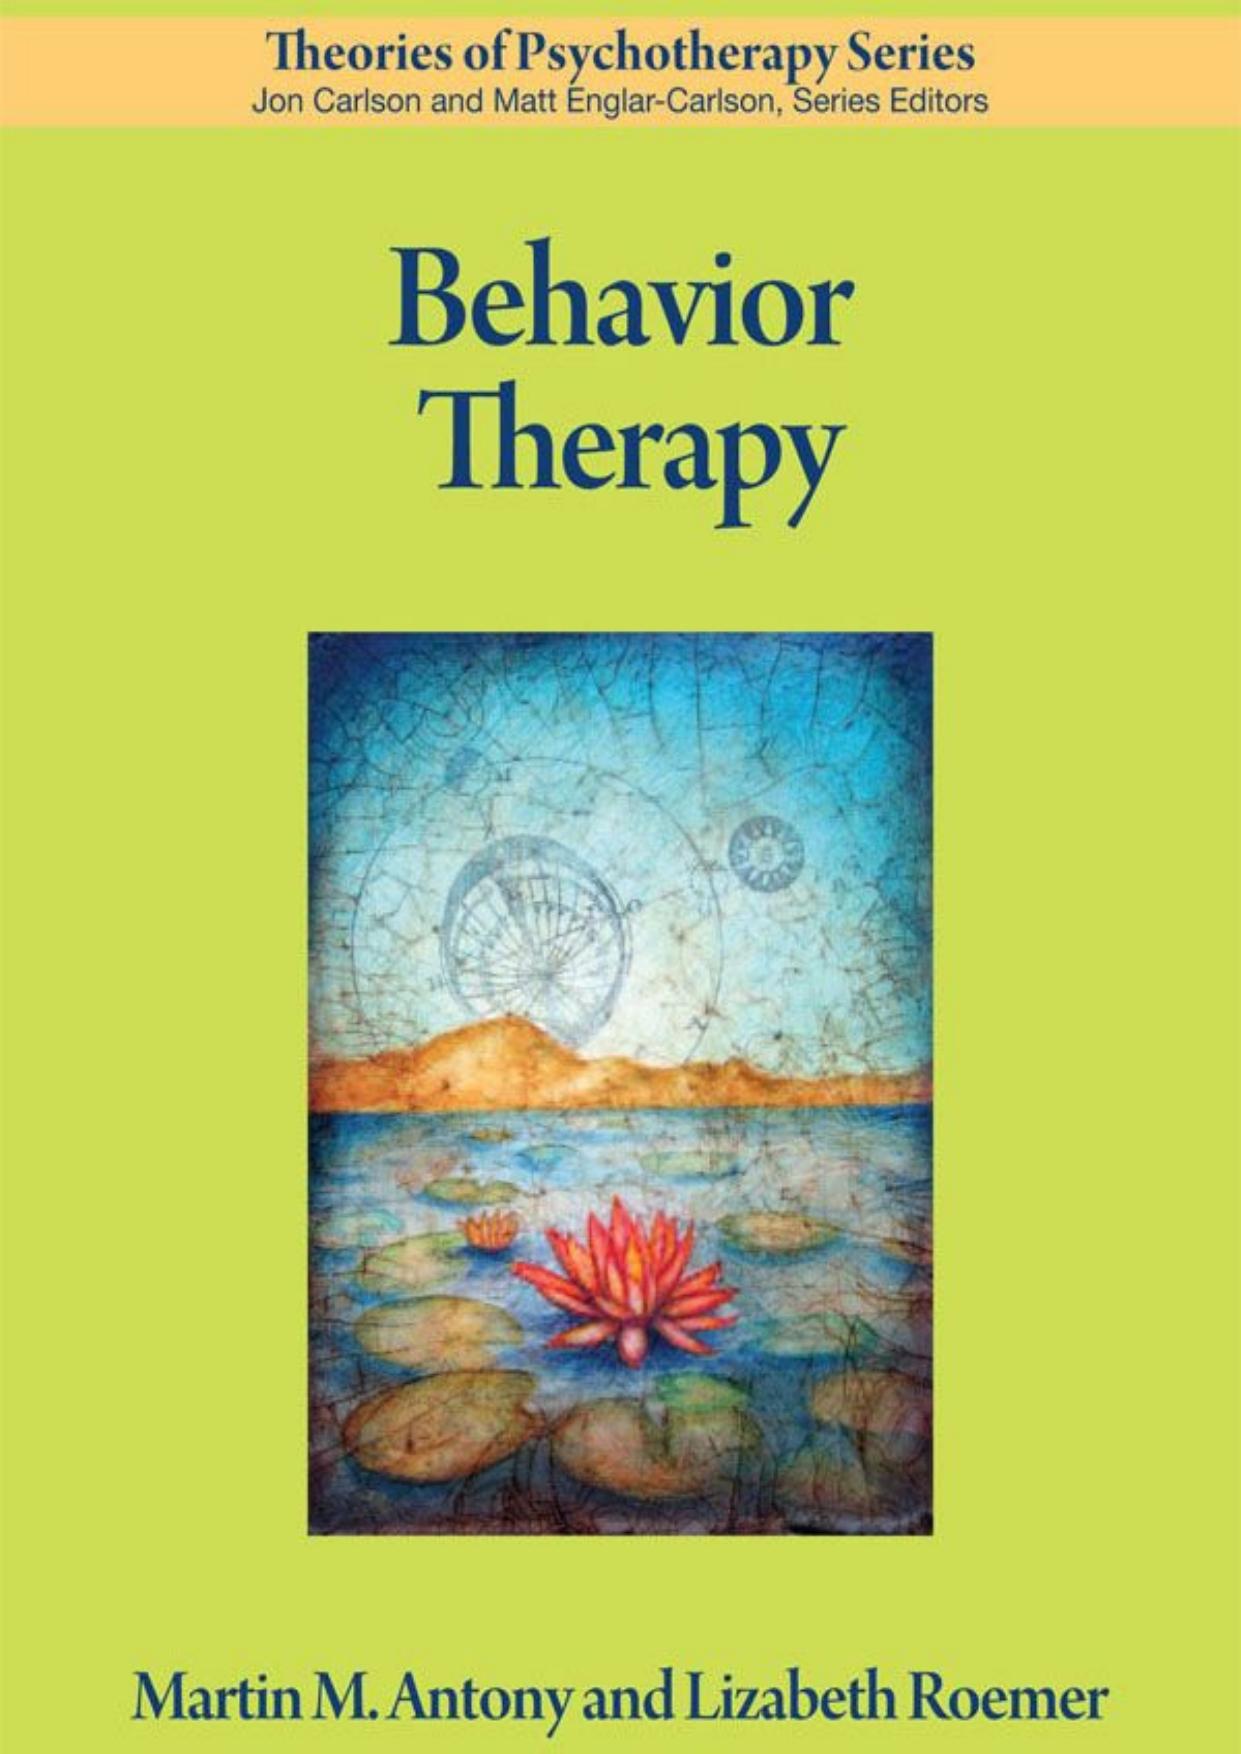 (eBook PDF)Behavior Therapy (Theories of Psychotherapy) - Martin M. Antony & Lizabeth Roemer by Martin M. Antony